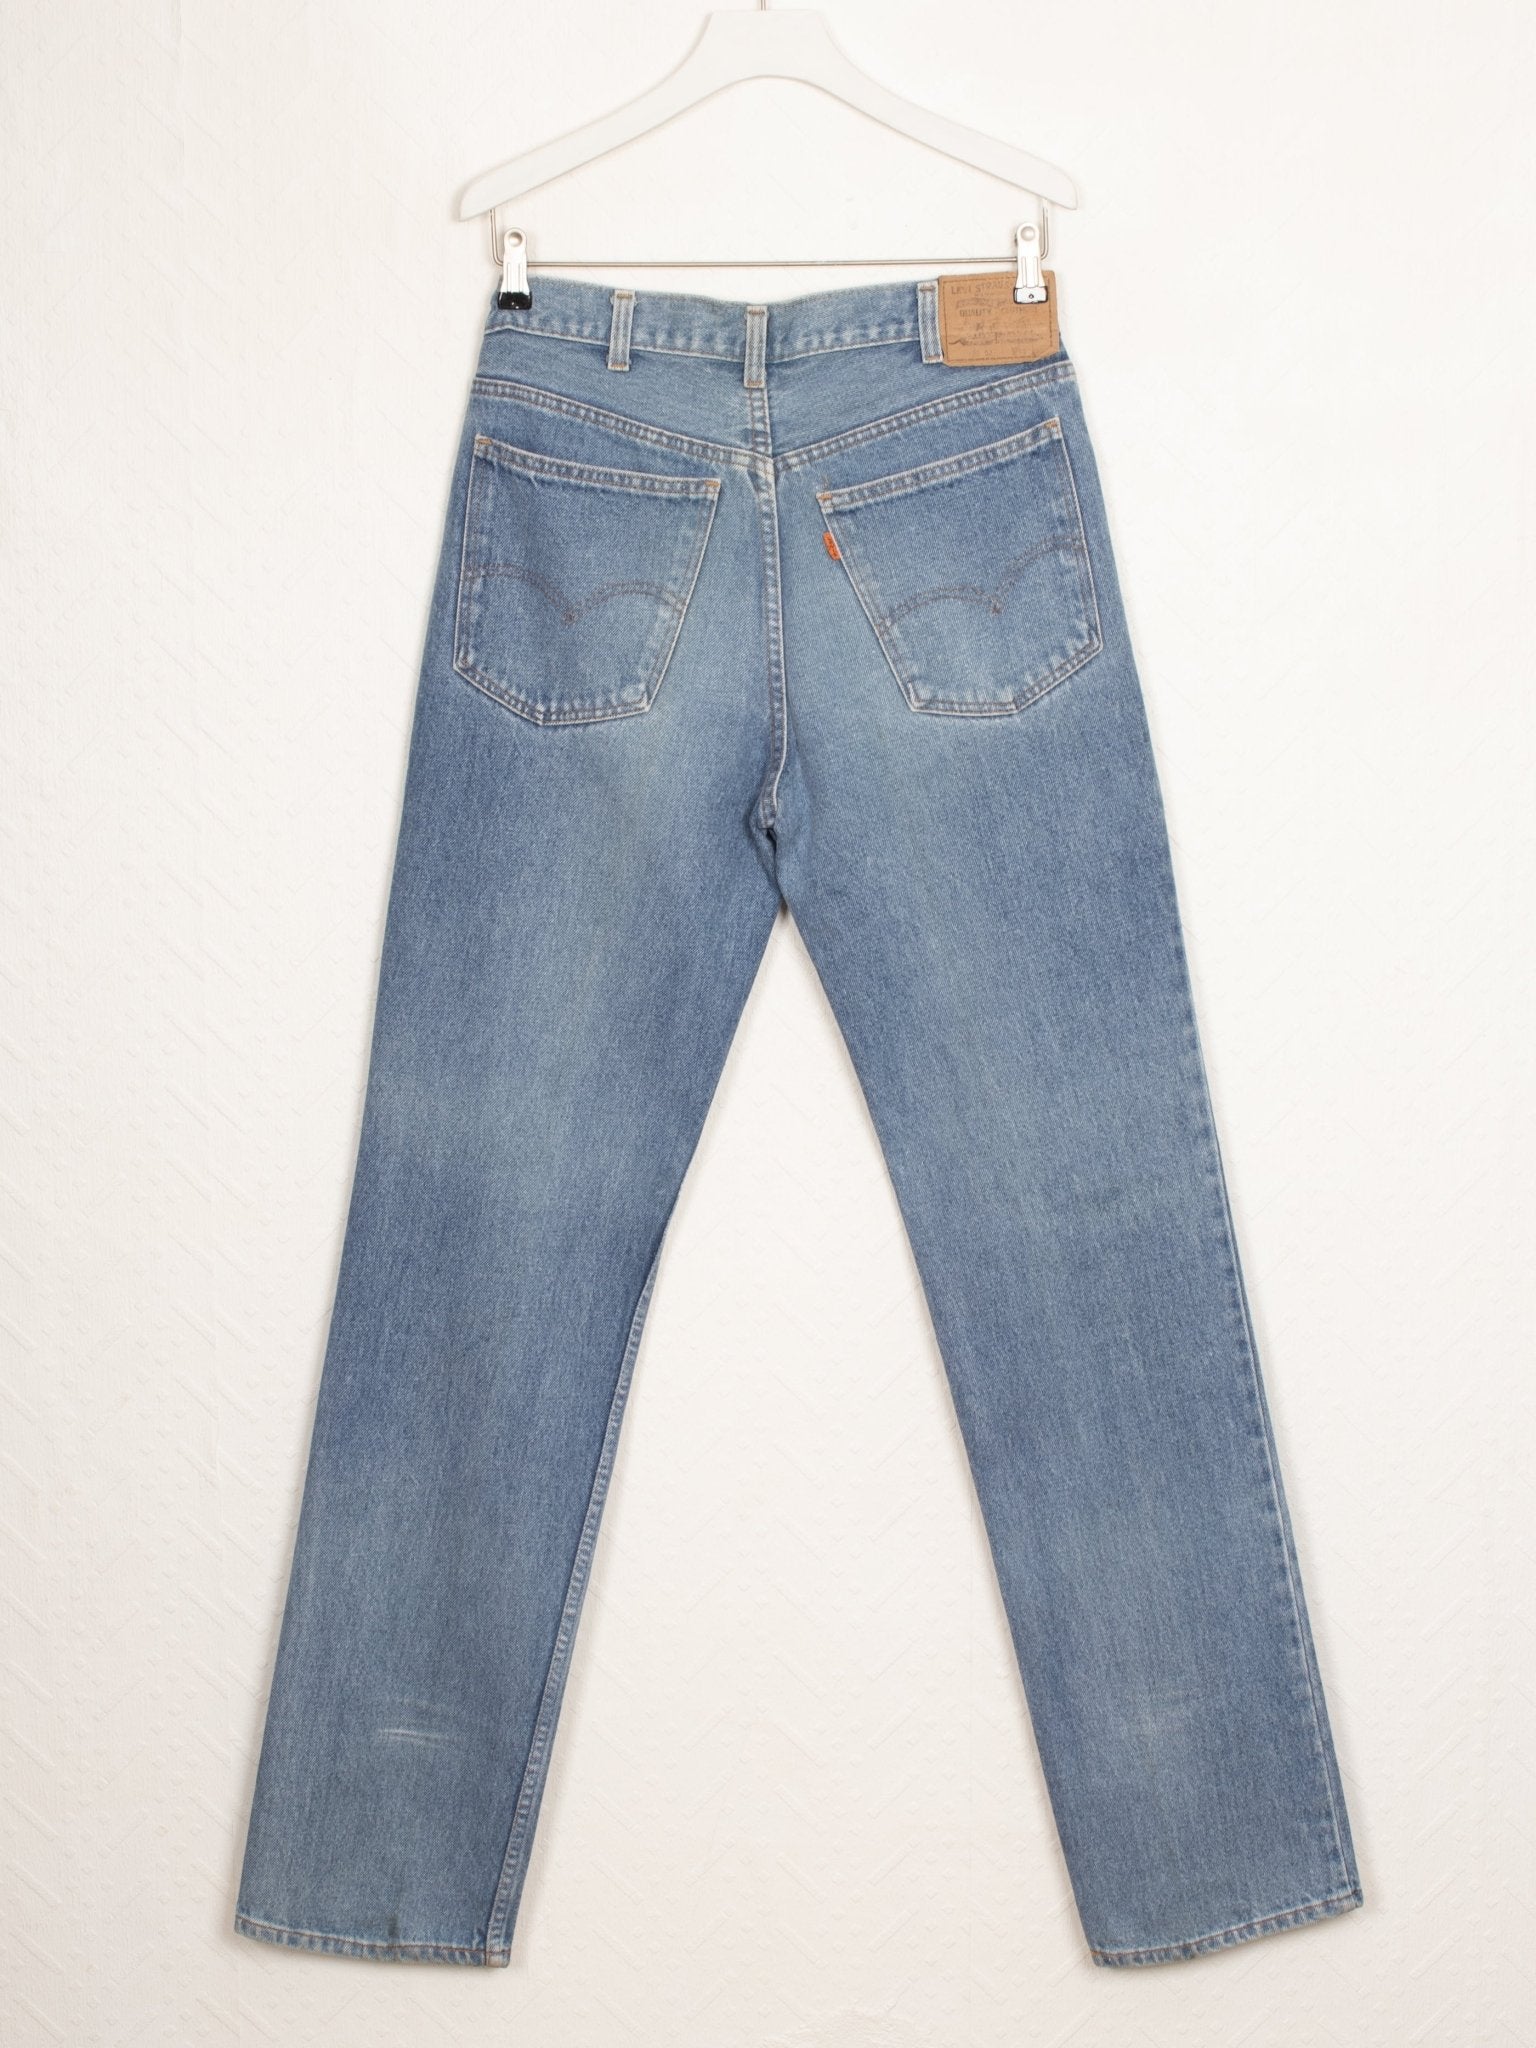 1980s Levi's Orange Tab 630 Slim Jeans